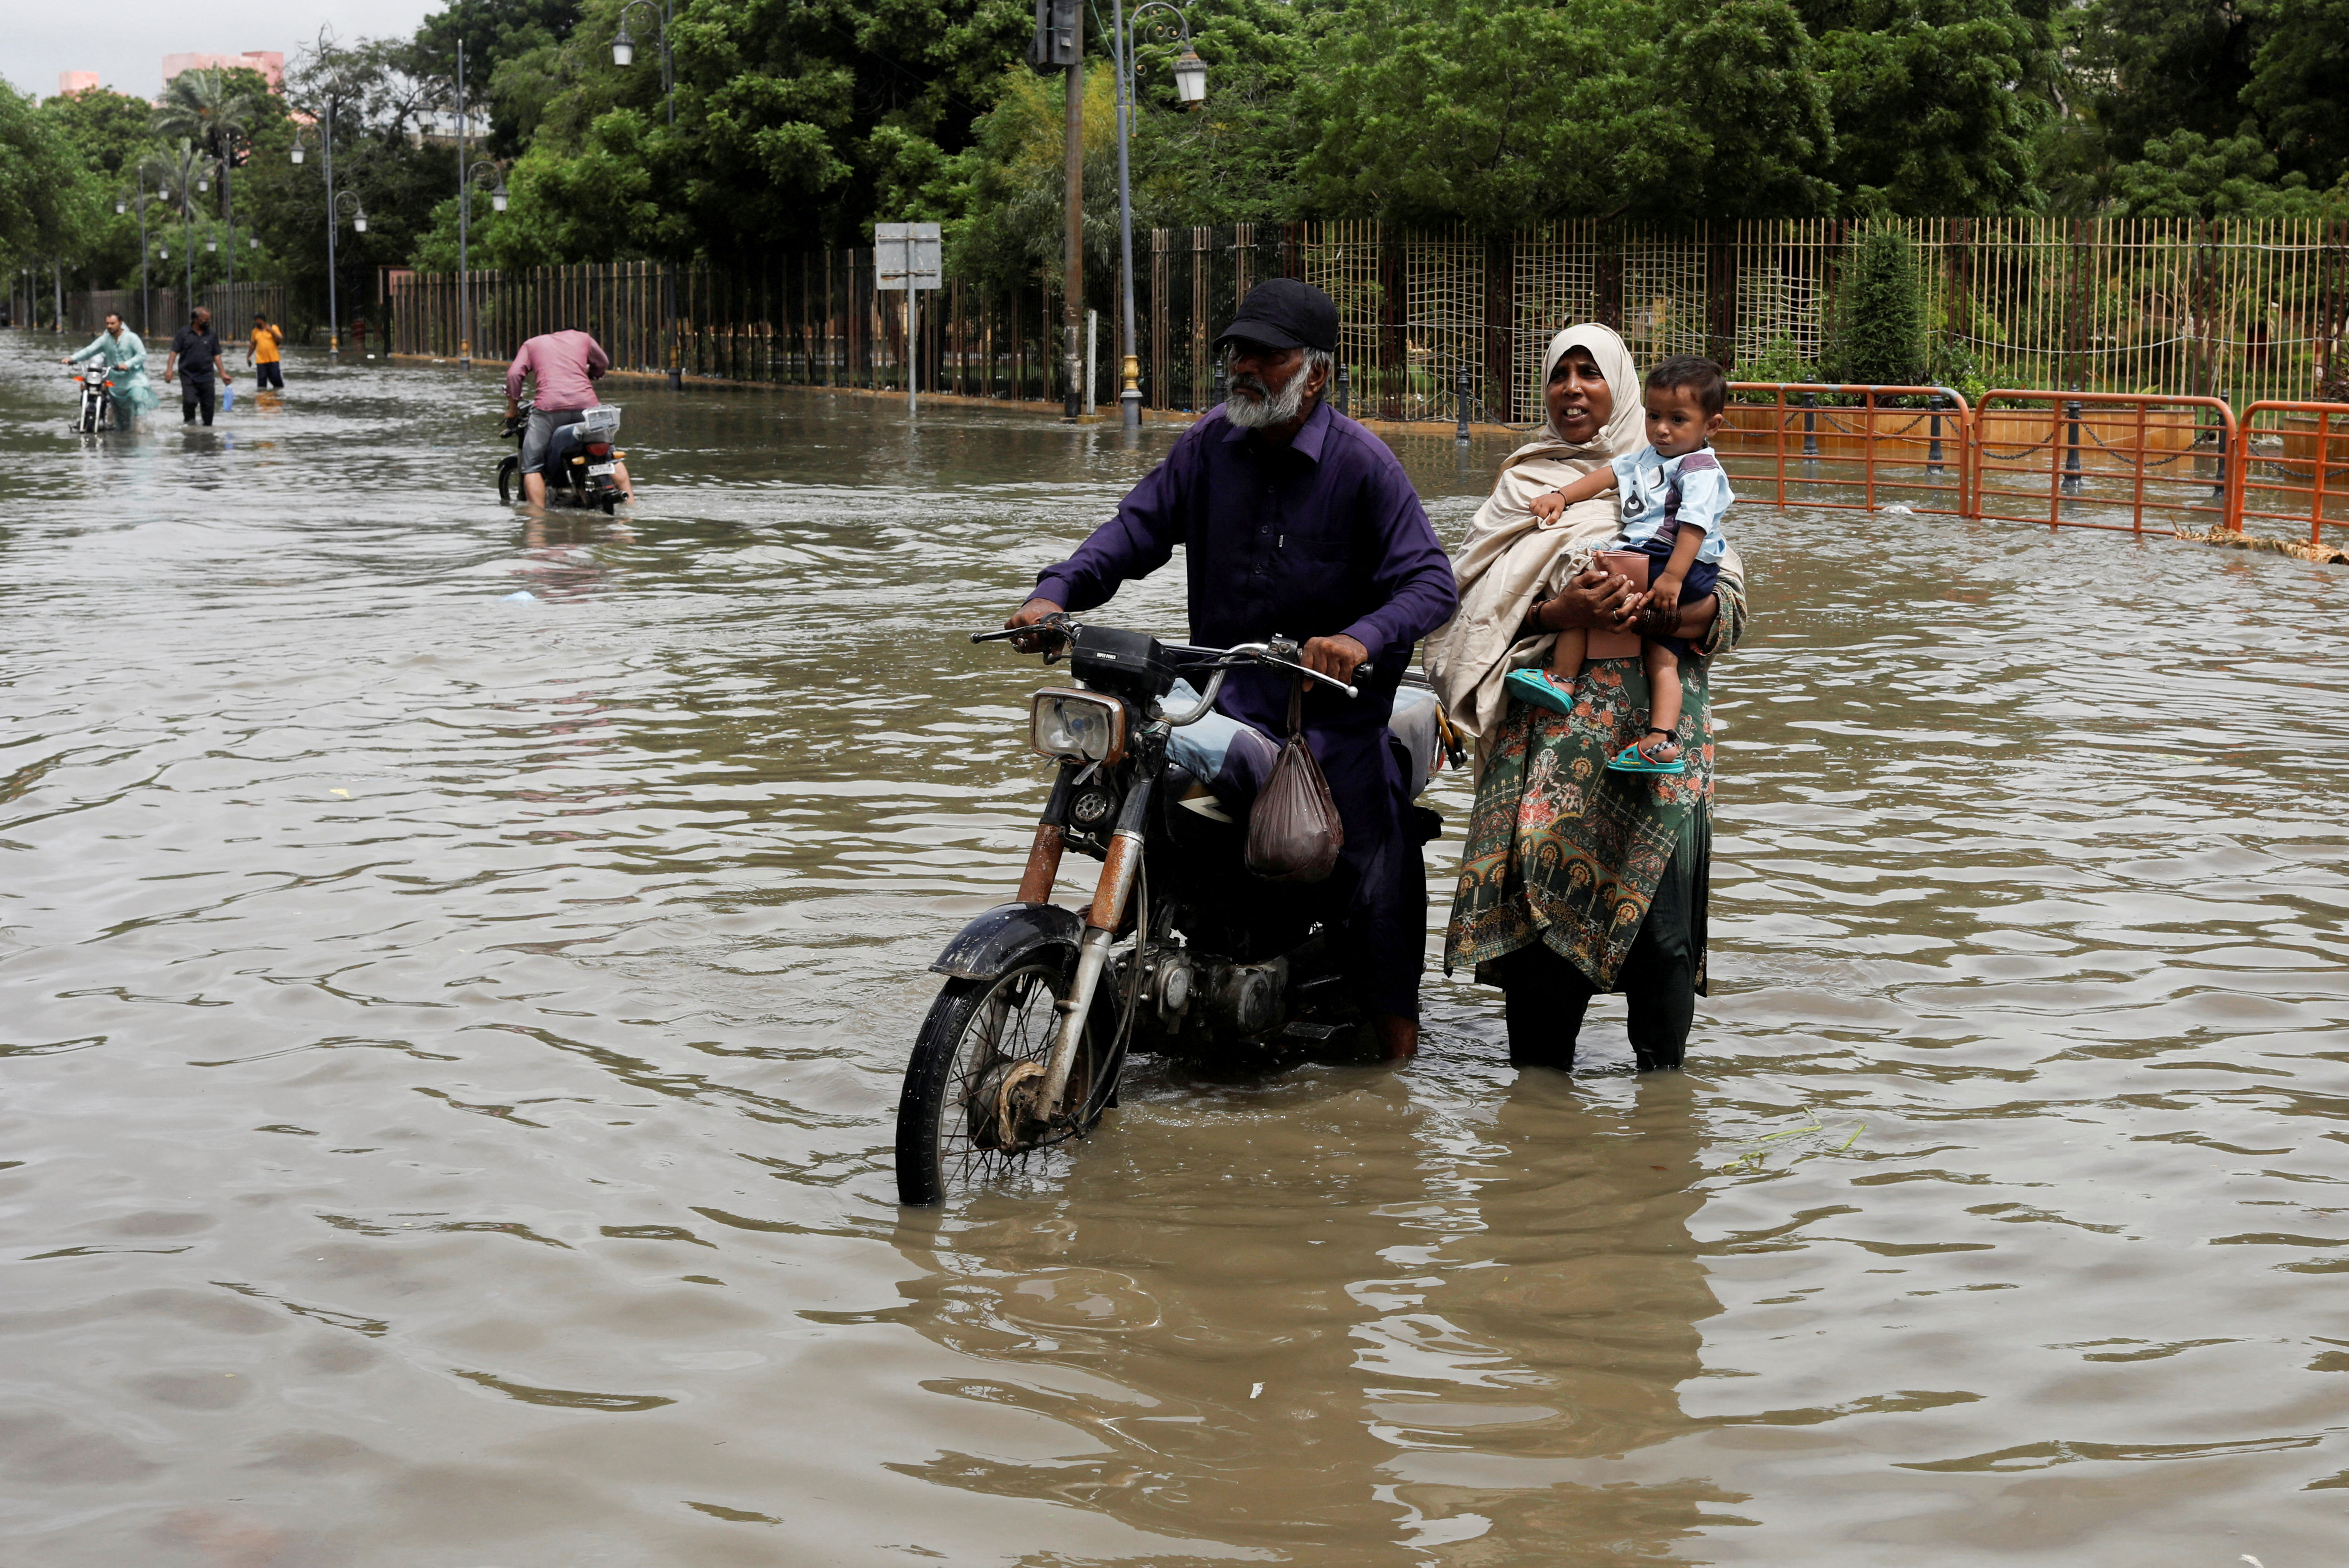 A family wade through a flooded street during the monsoon season in Karachi